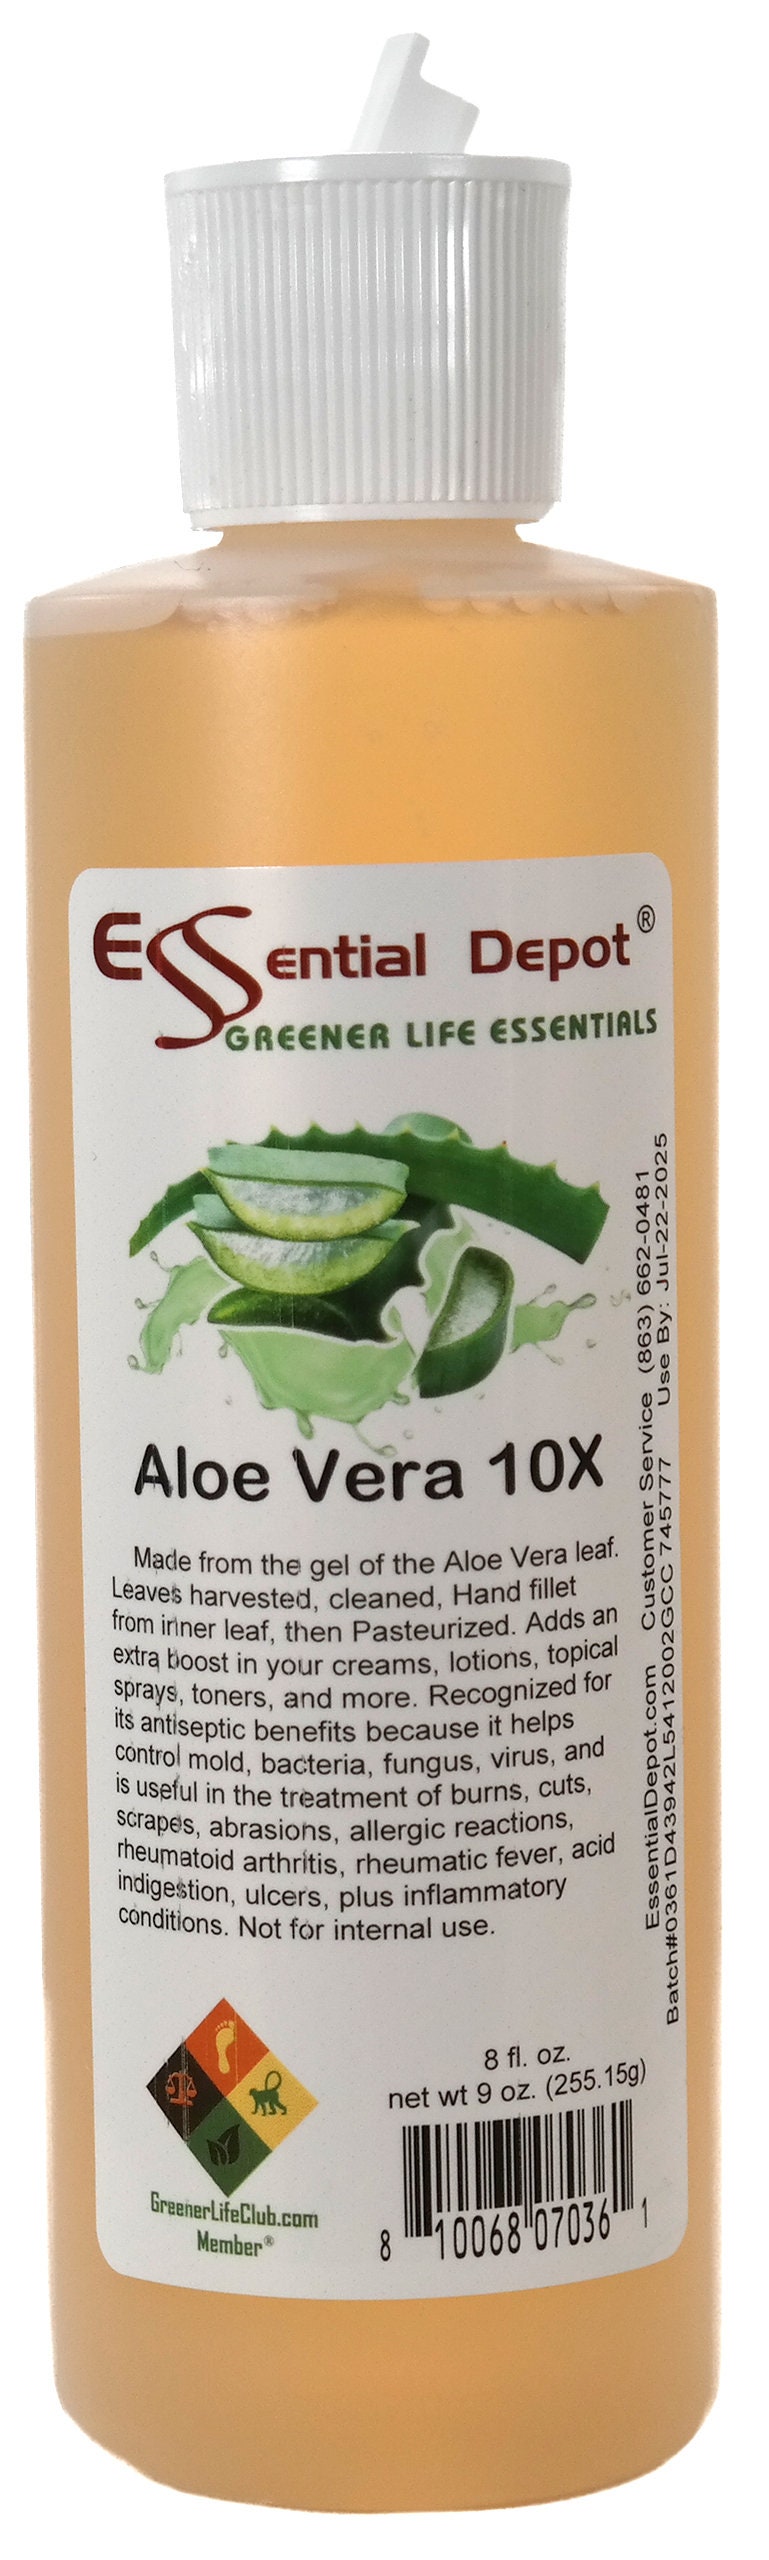 cylinder forvisning praktisk Aloe Vera Gel 10X Decolorized No Chemical Processing - Etsy